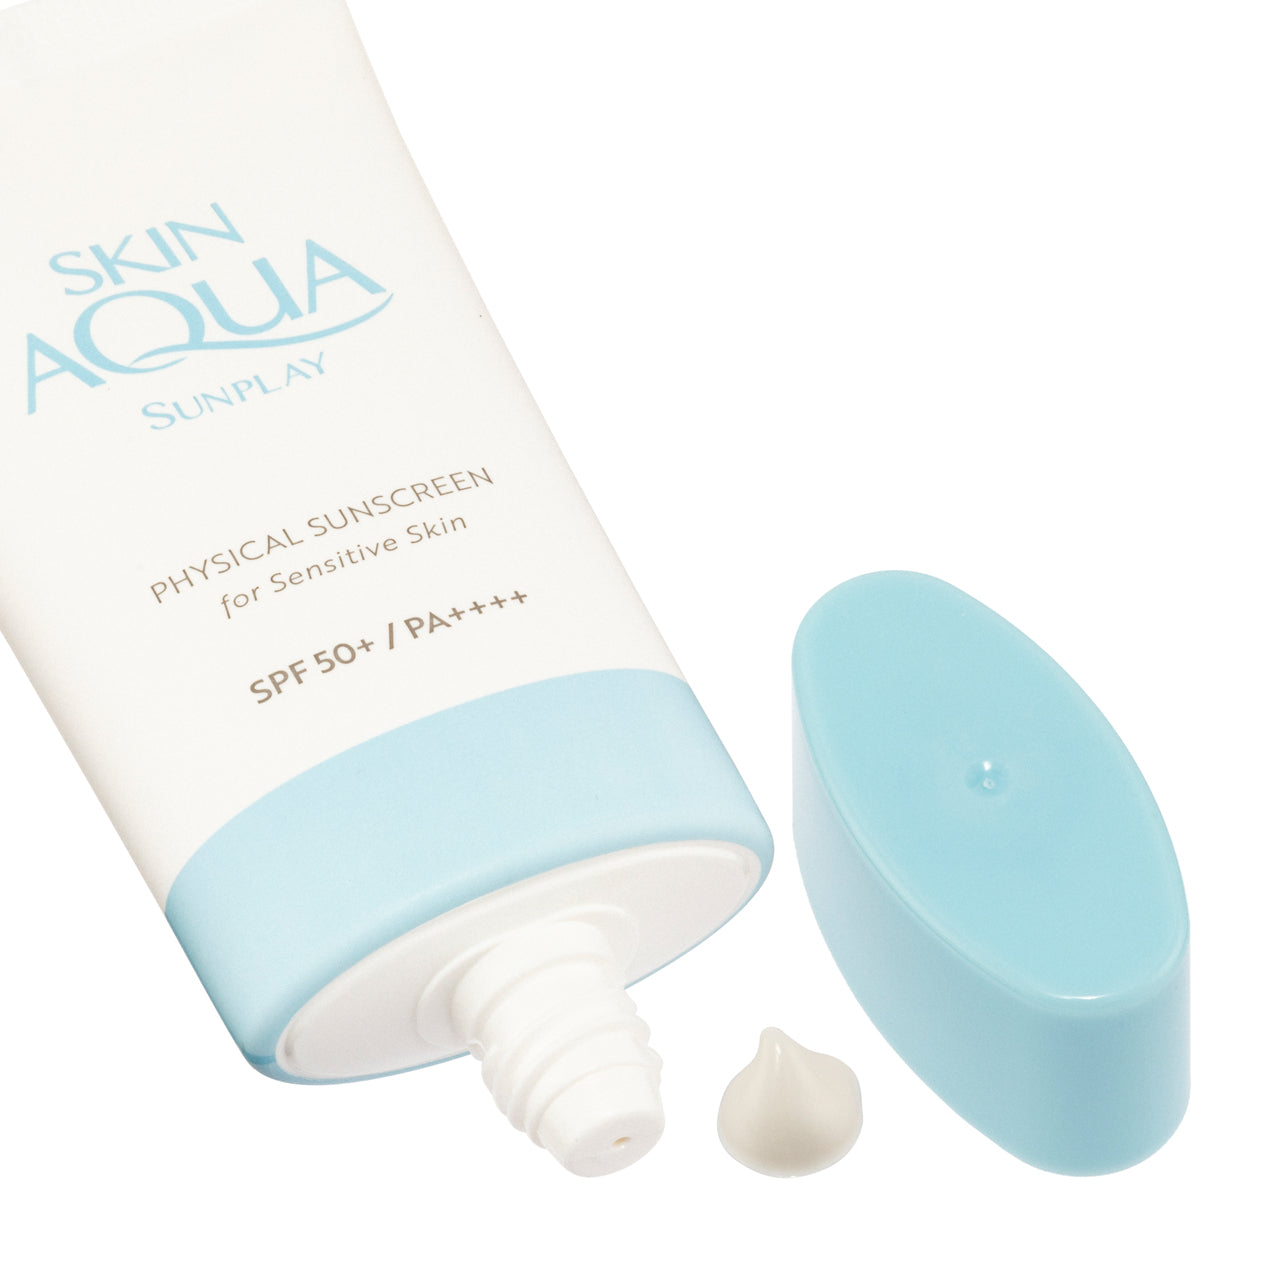 Mentholatum Skin Aqua Physical Sunscreen For Sensitive Skin SPF50+ Pa++++ 50ML